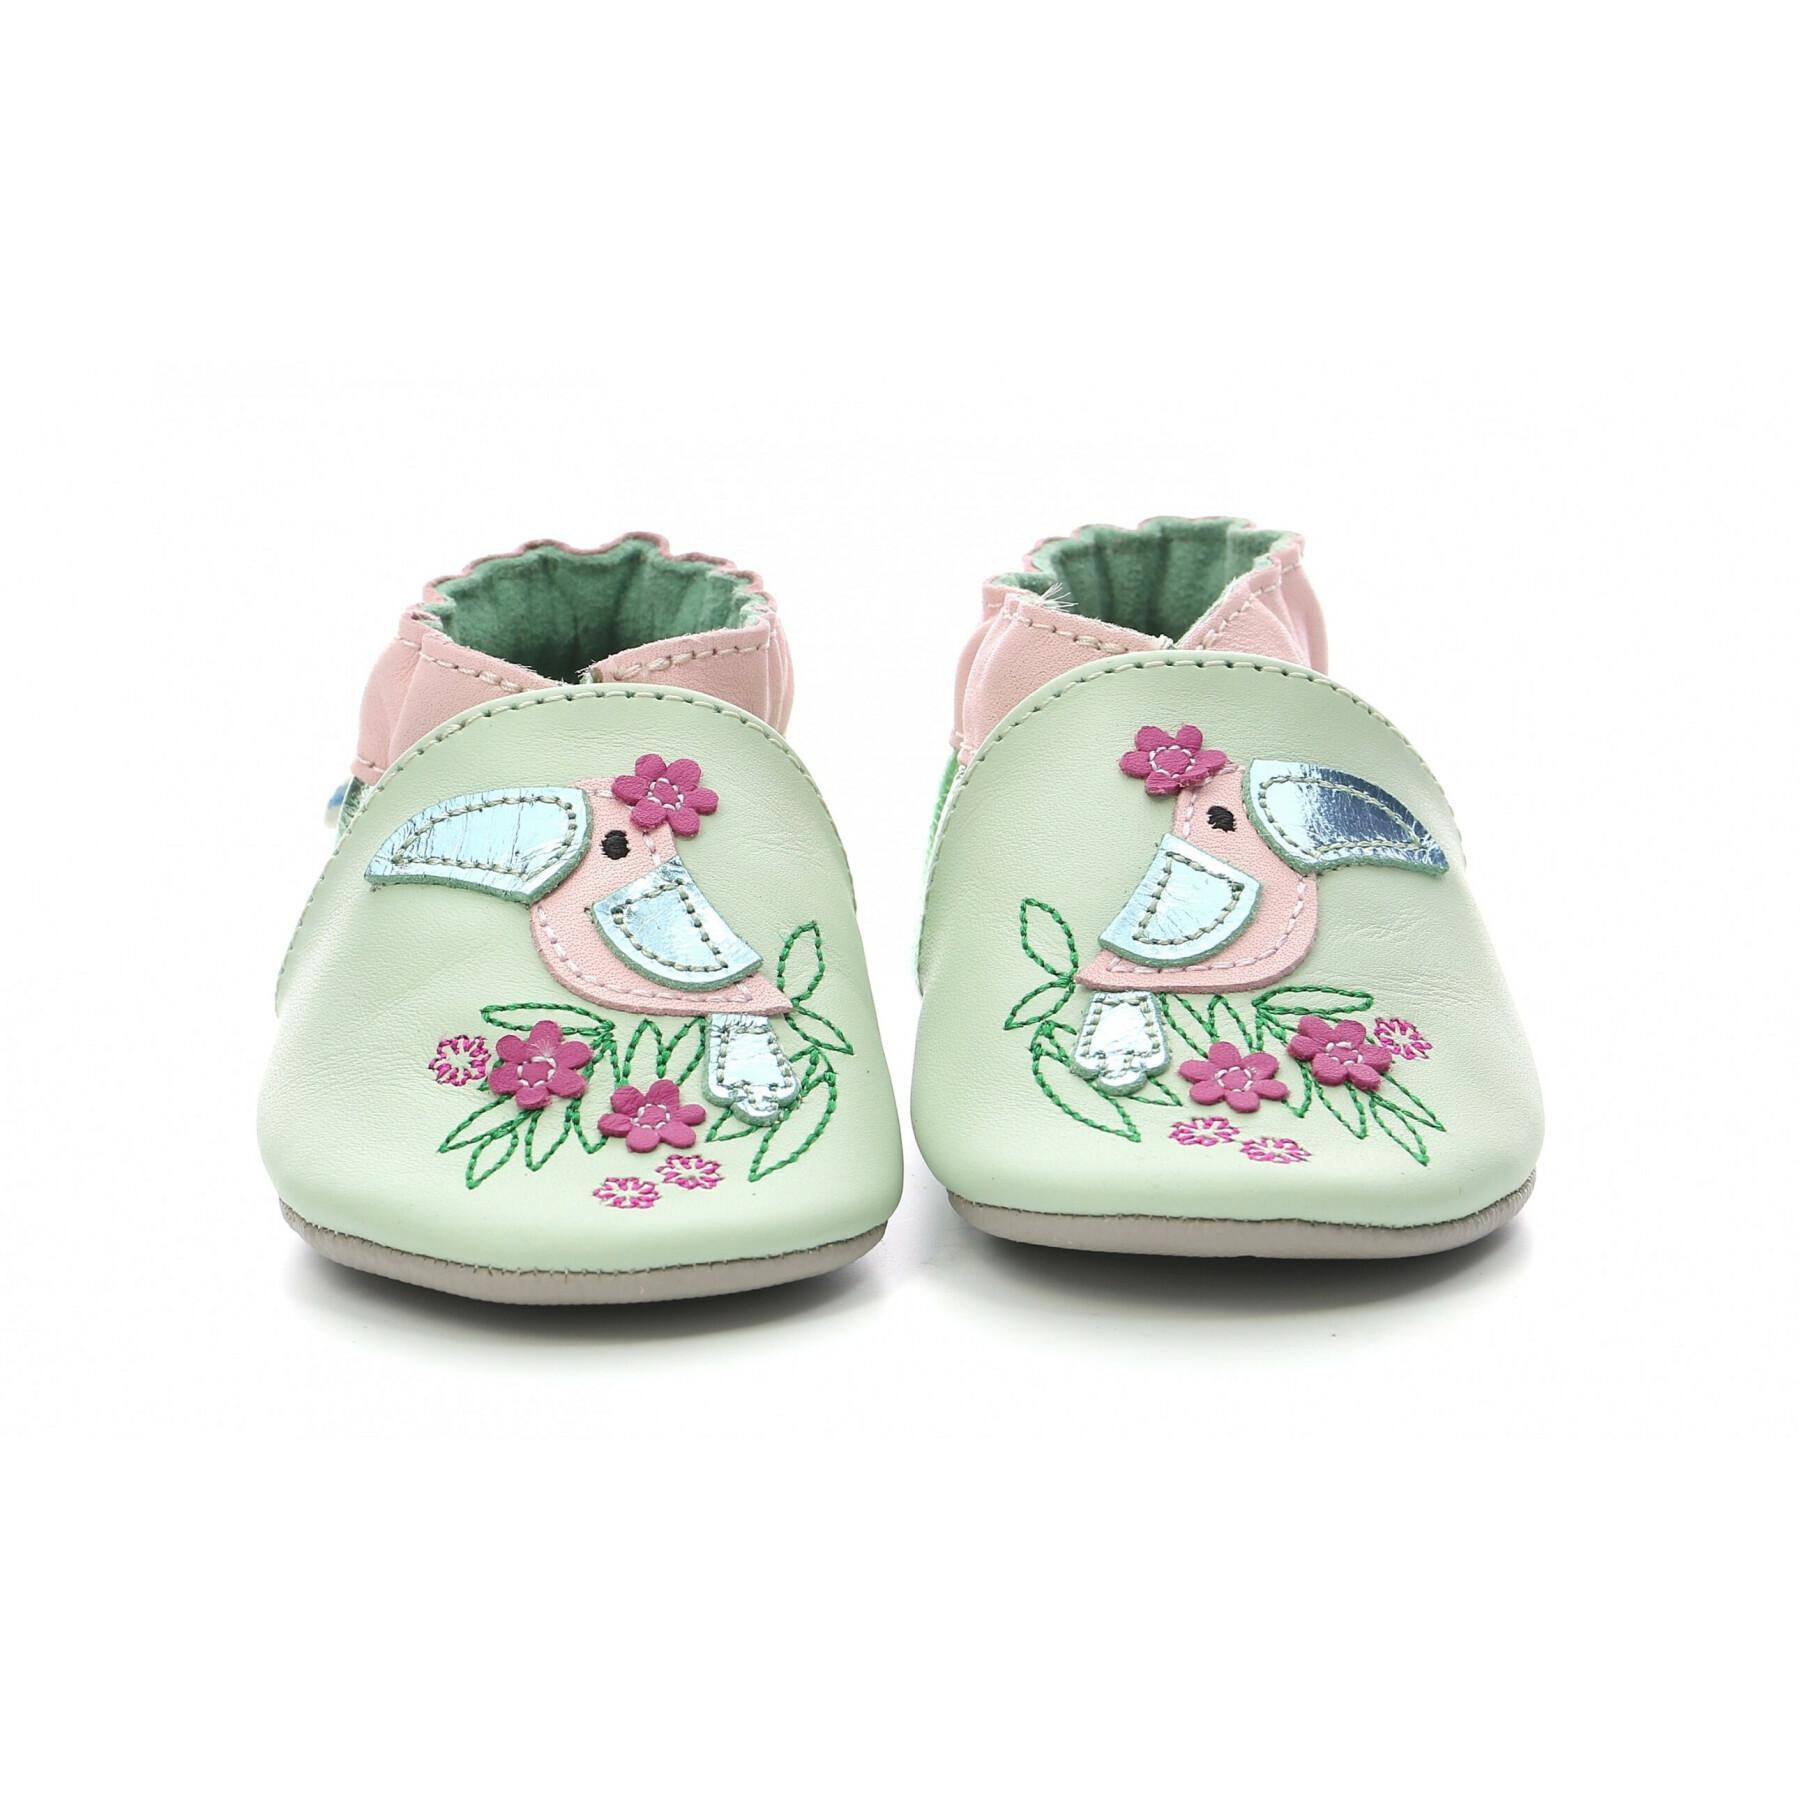 Baby girl shoes Robeez Exotic Toucan